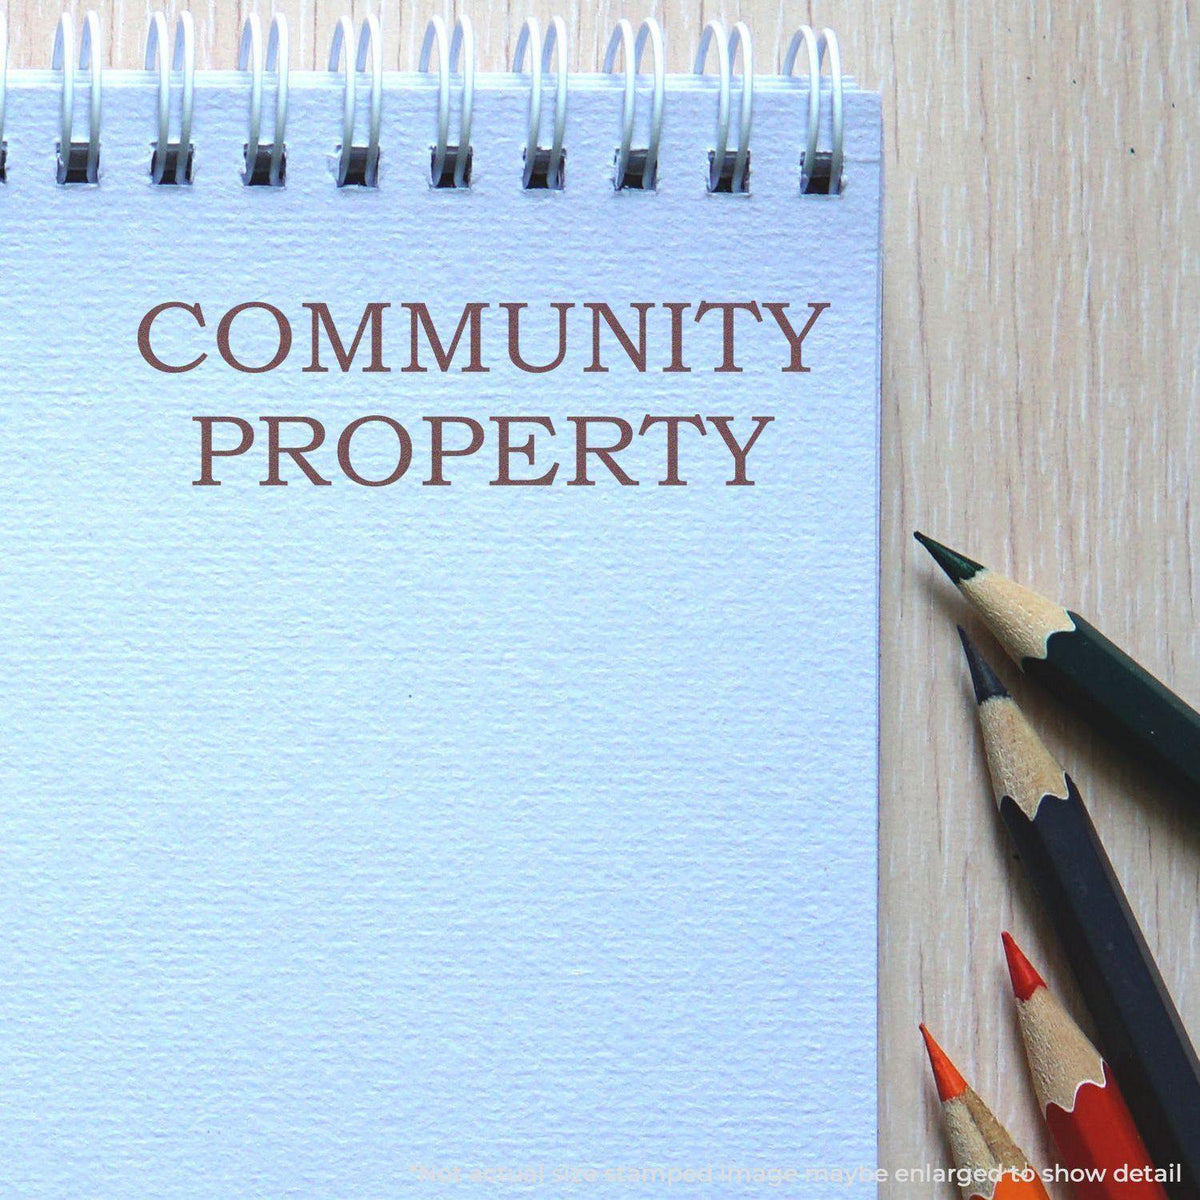 In Use Slim Pre Inked Community Property Stamp Image